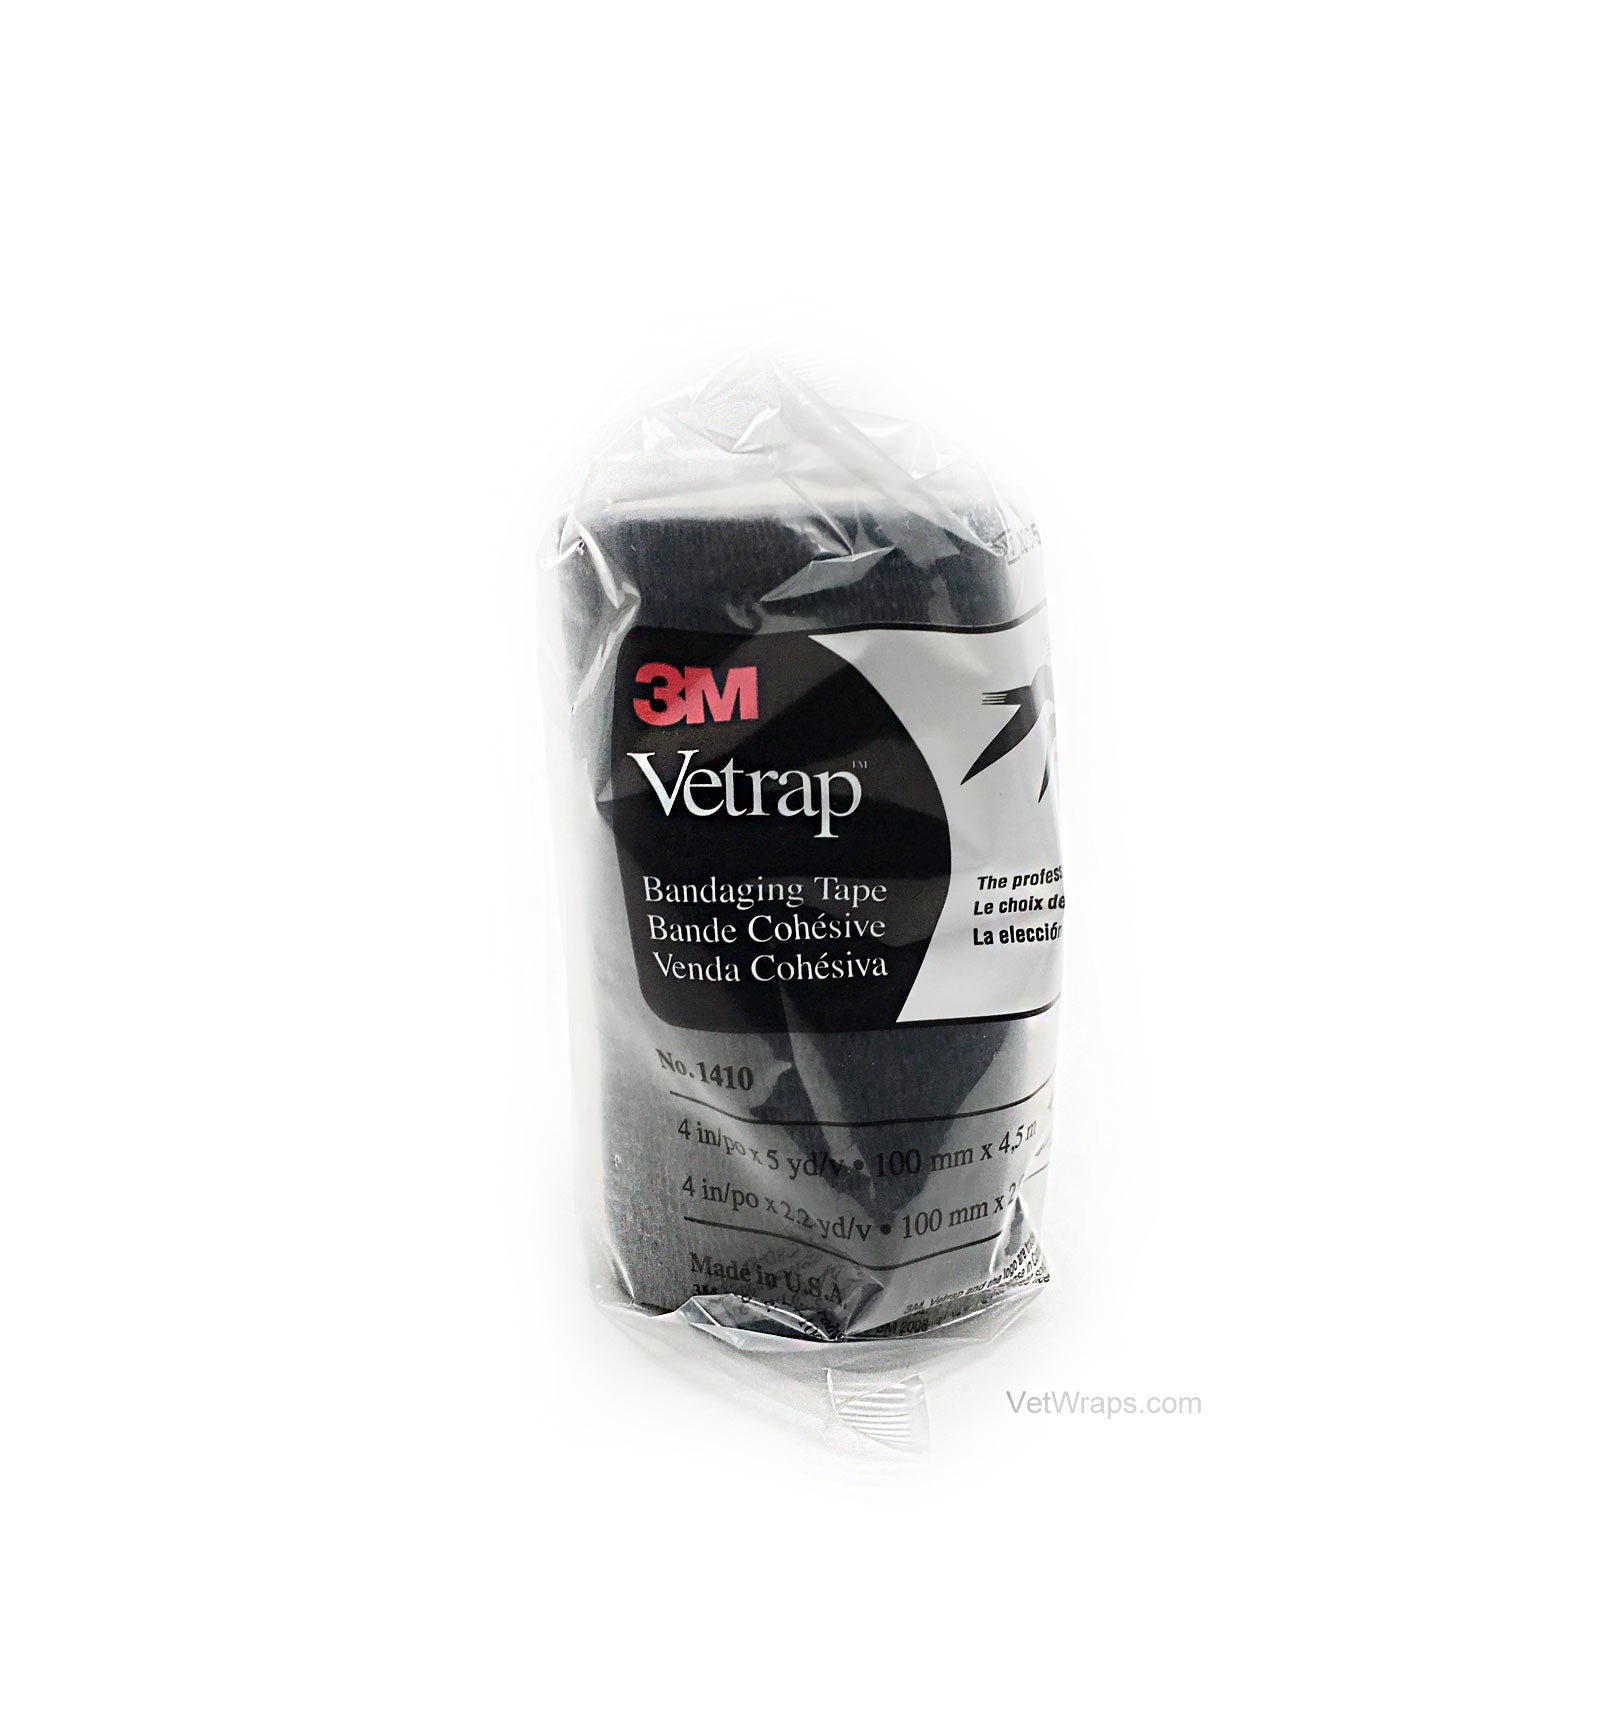 3M Vetrap 4 Inch Color Pack - (Black Roll)